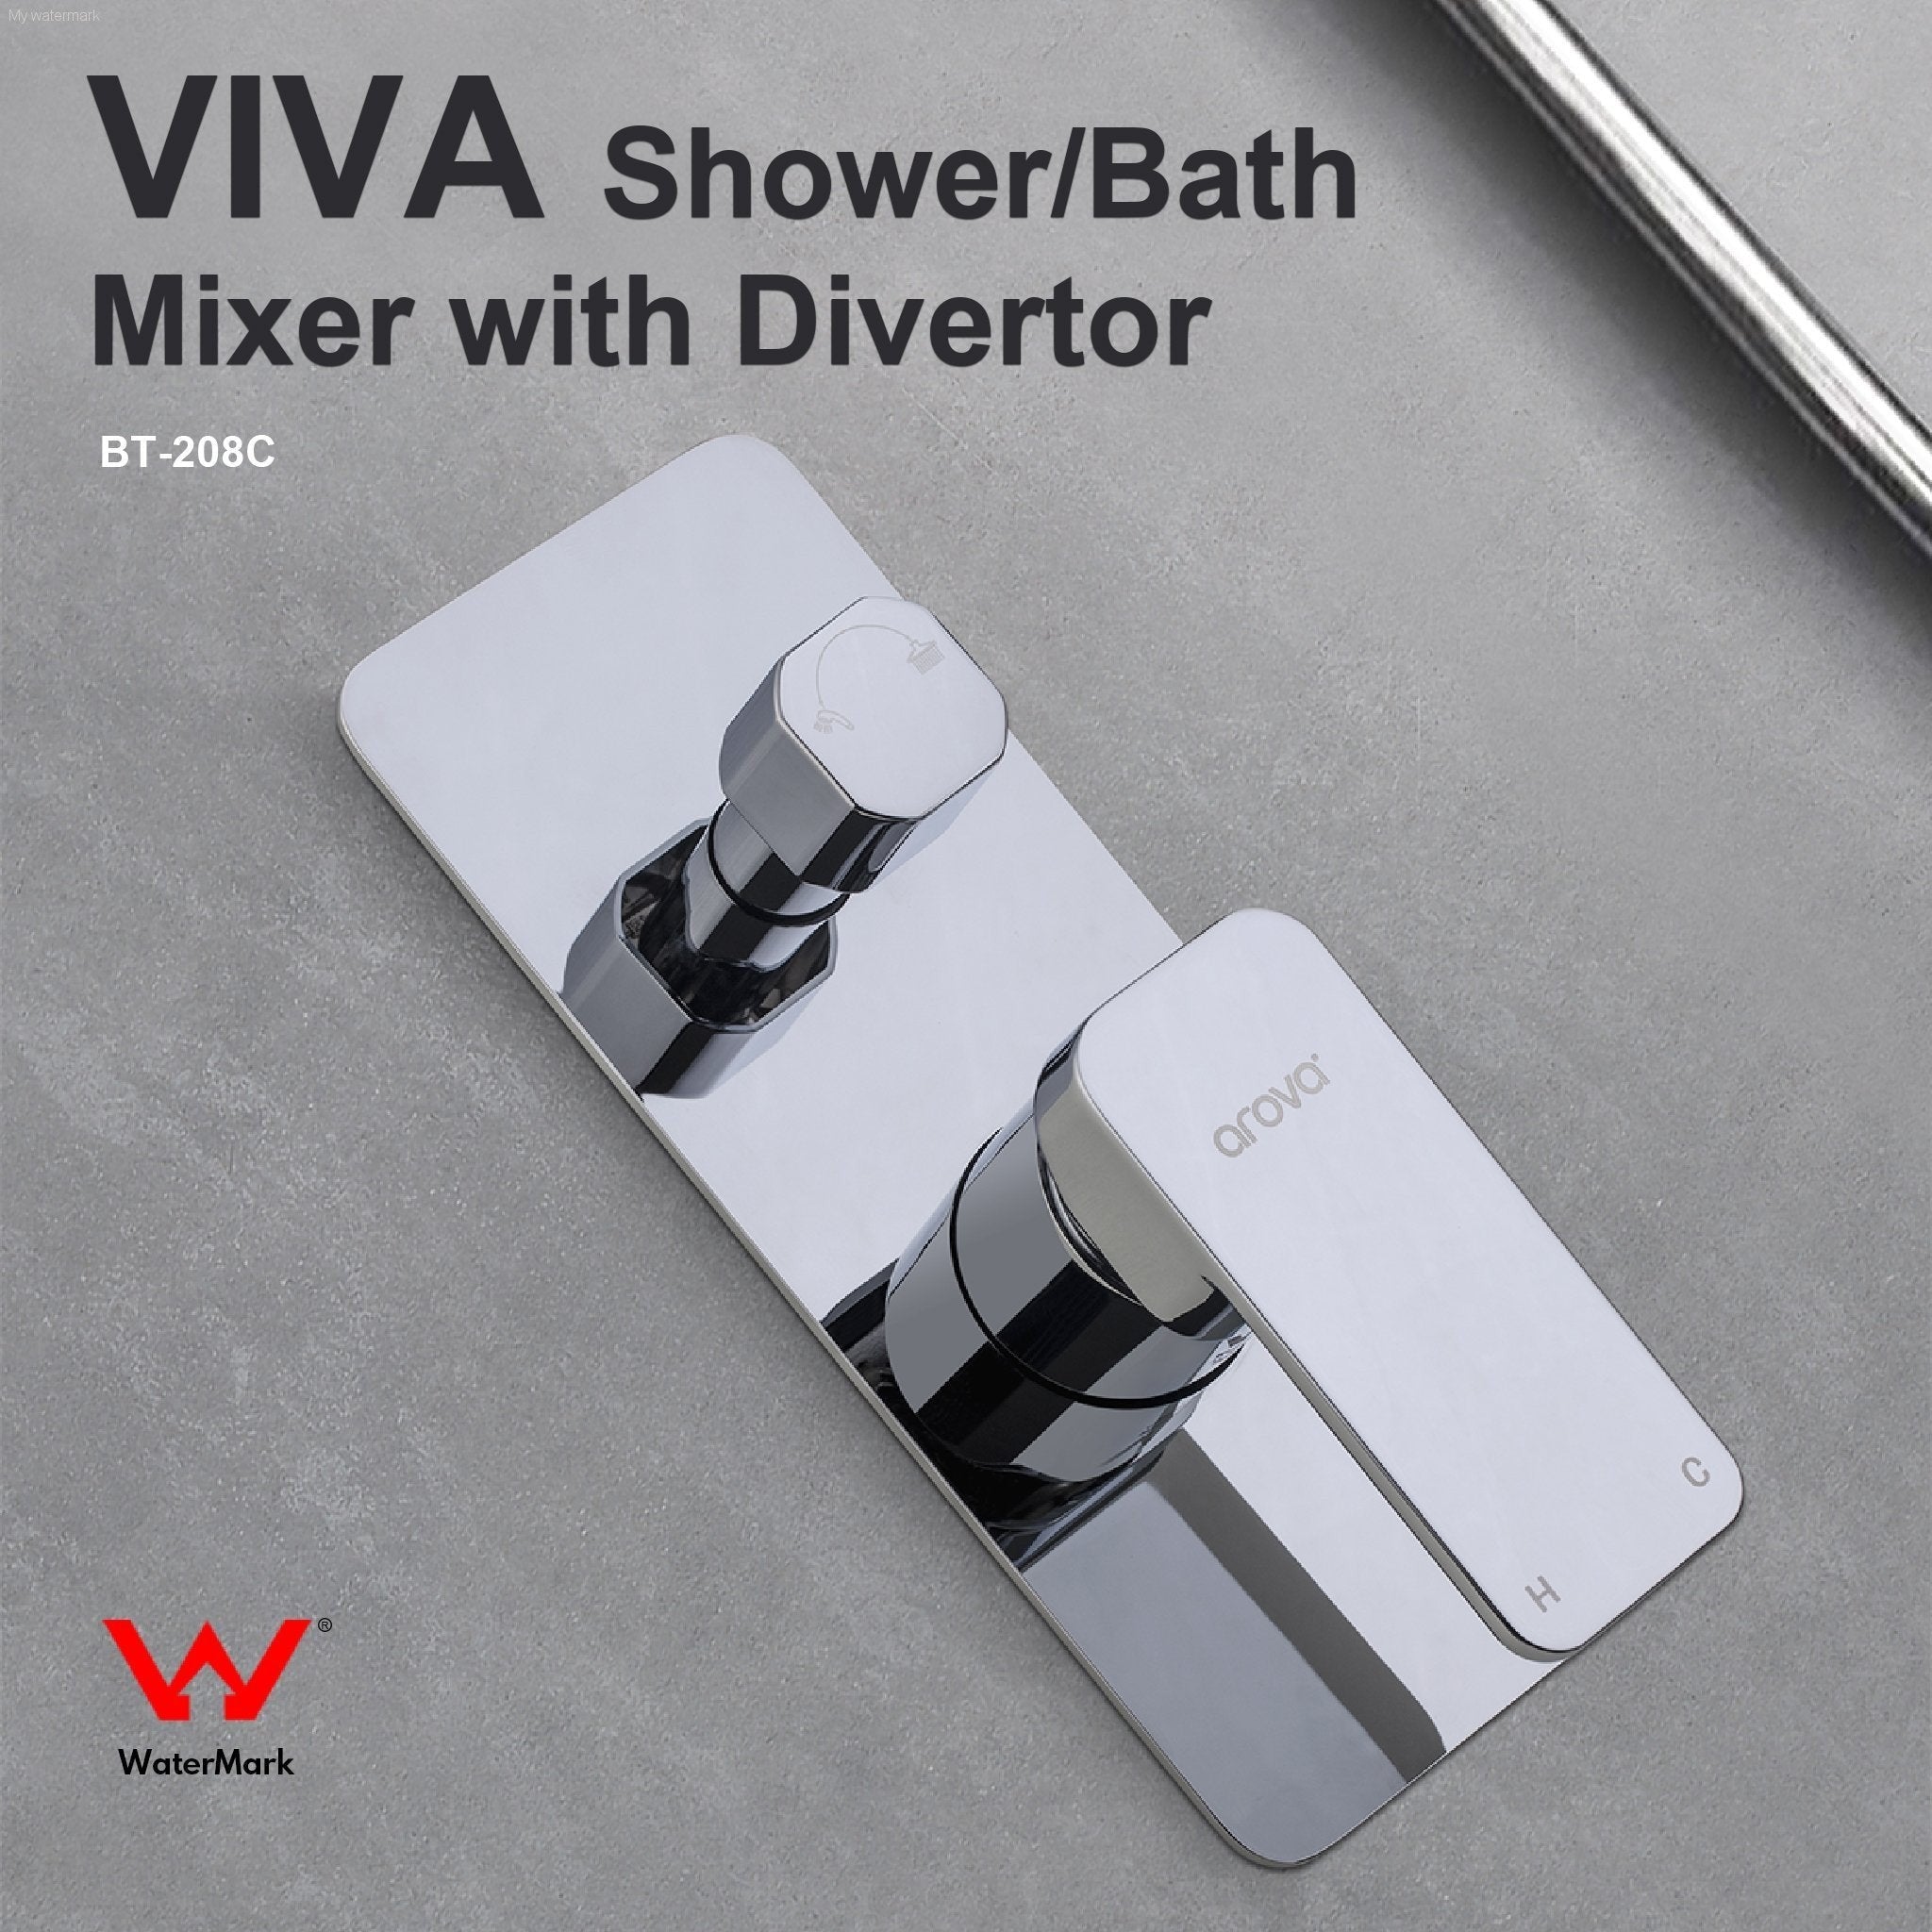 VIVA Shower Bath Mixer with Divertor